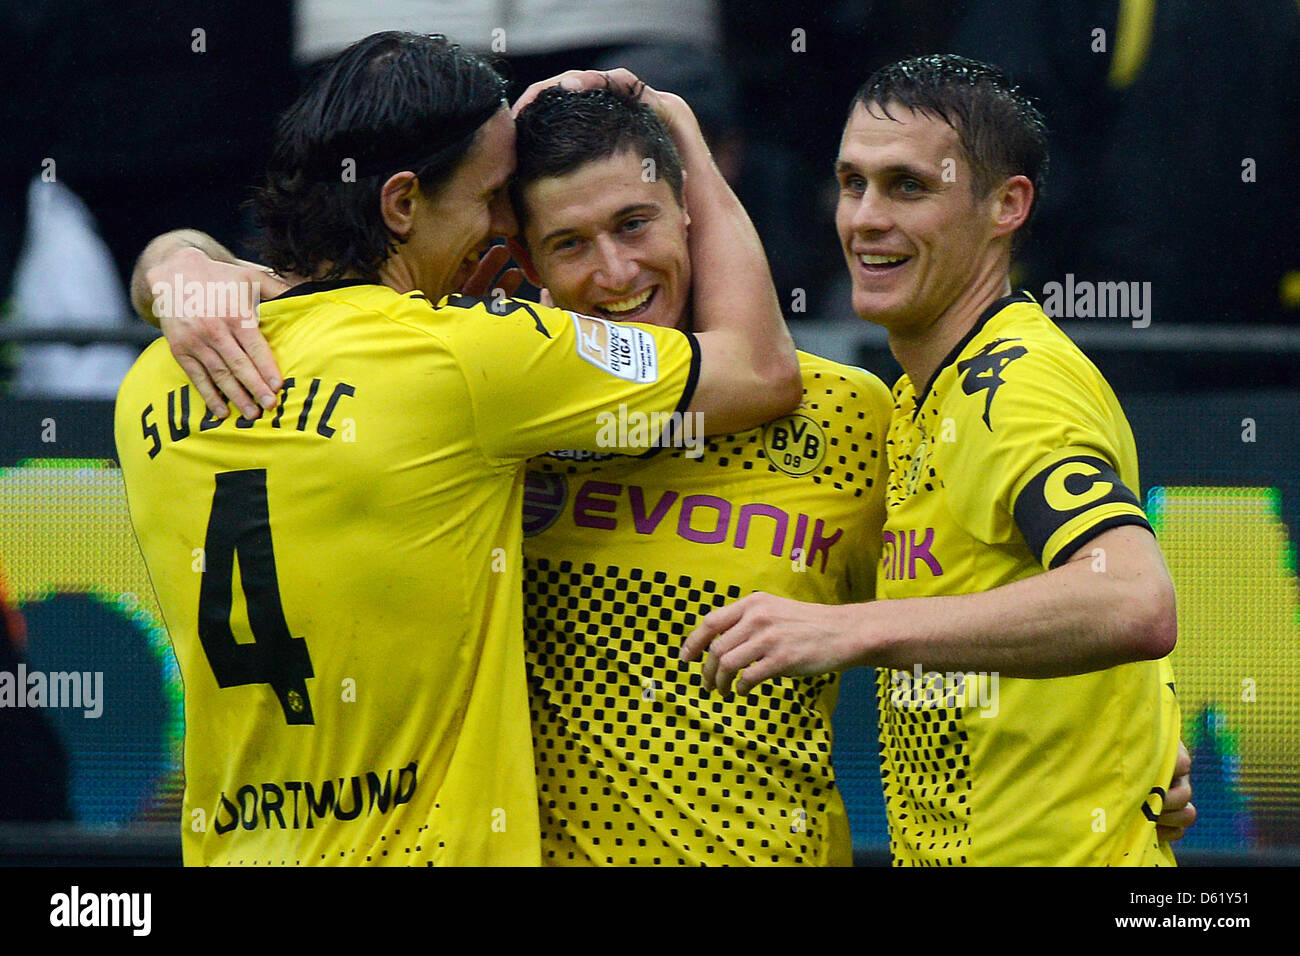 Borussia Dortmund's all-time top XI, featuring Robert Lewandowski